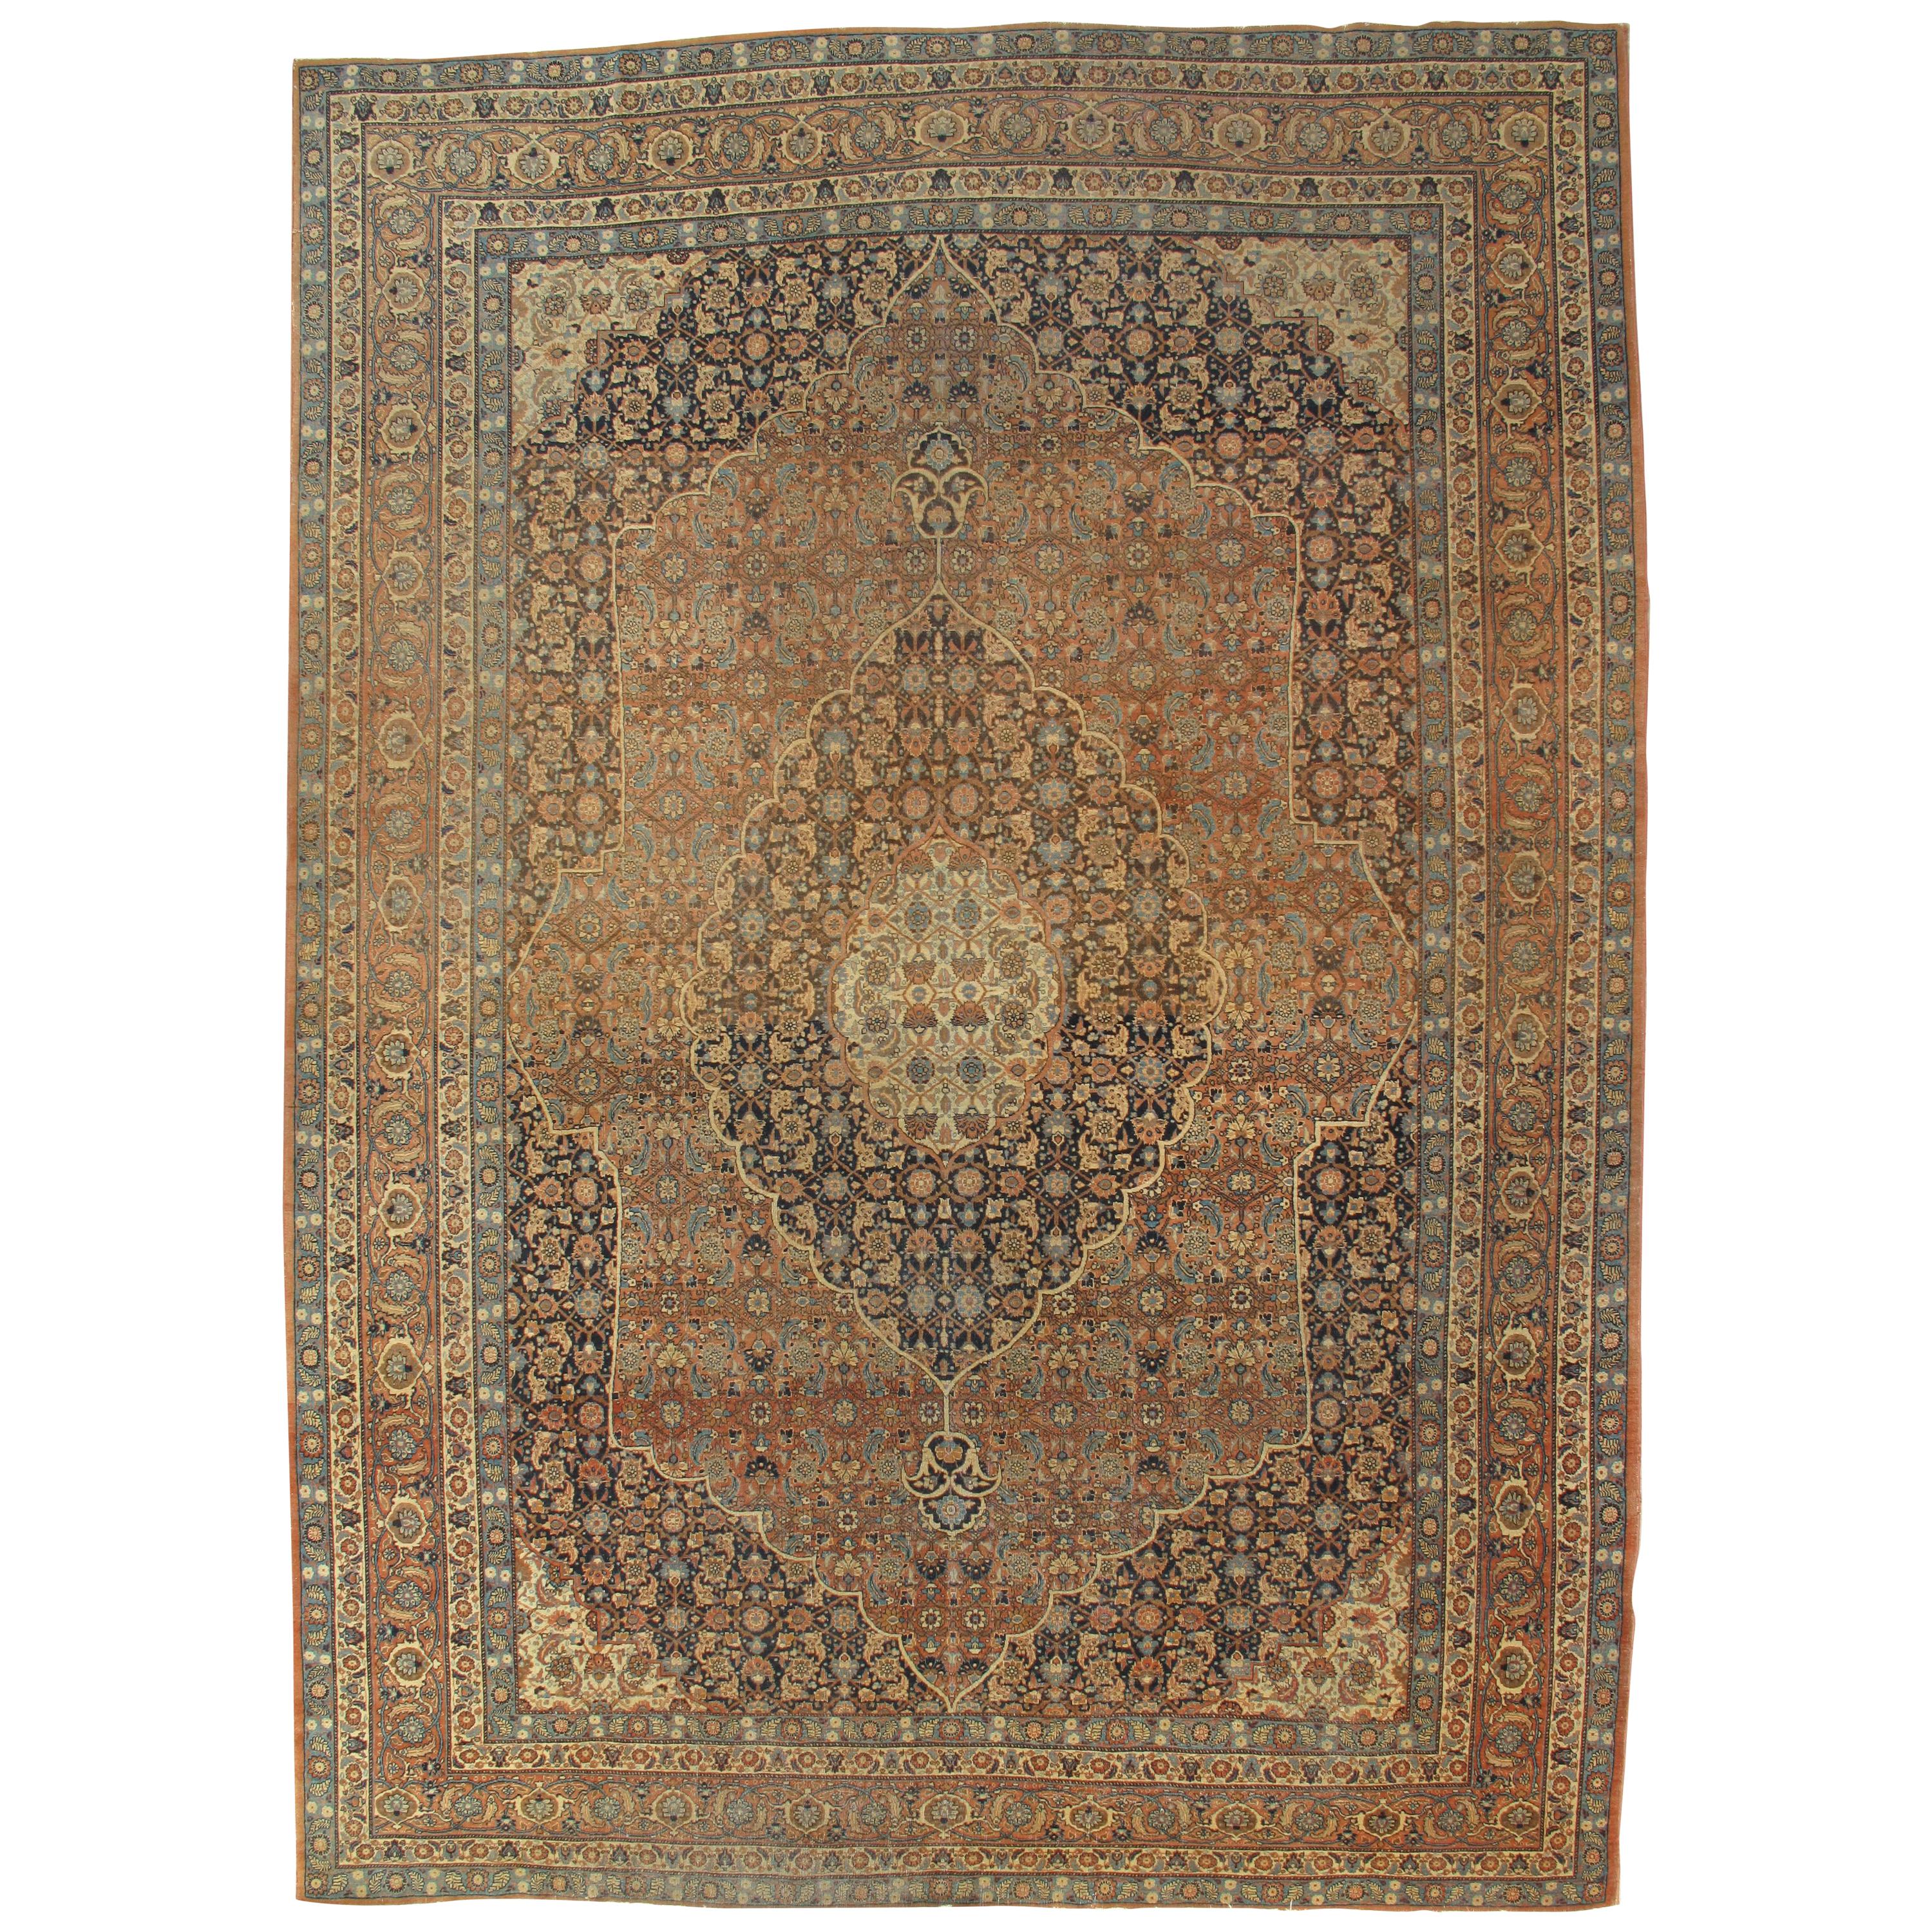 Antique Tabriz Carpet, Hadji Jalili Persian Rug, Earth Tones, Brown, Terracotta